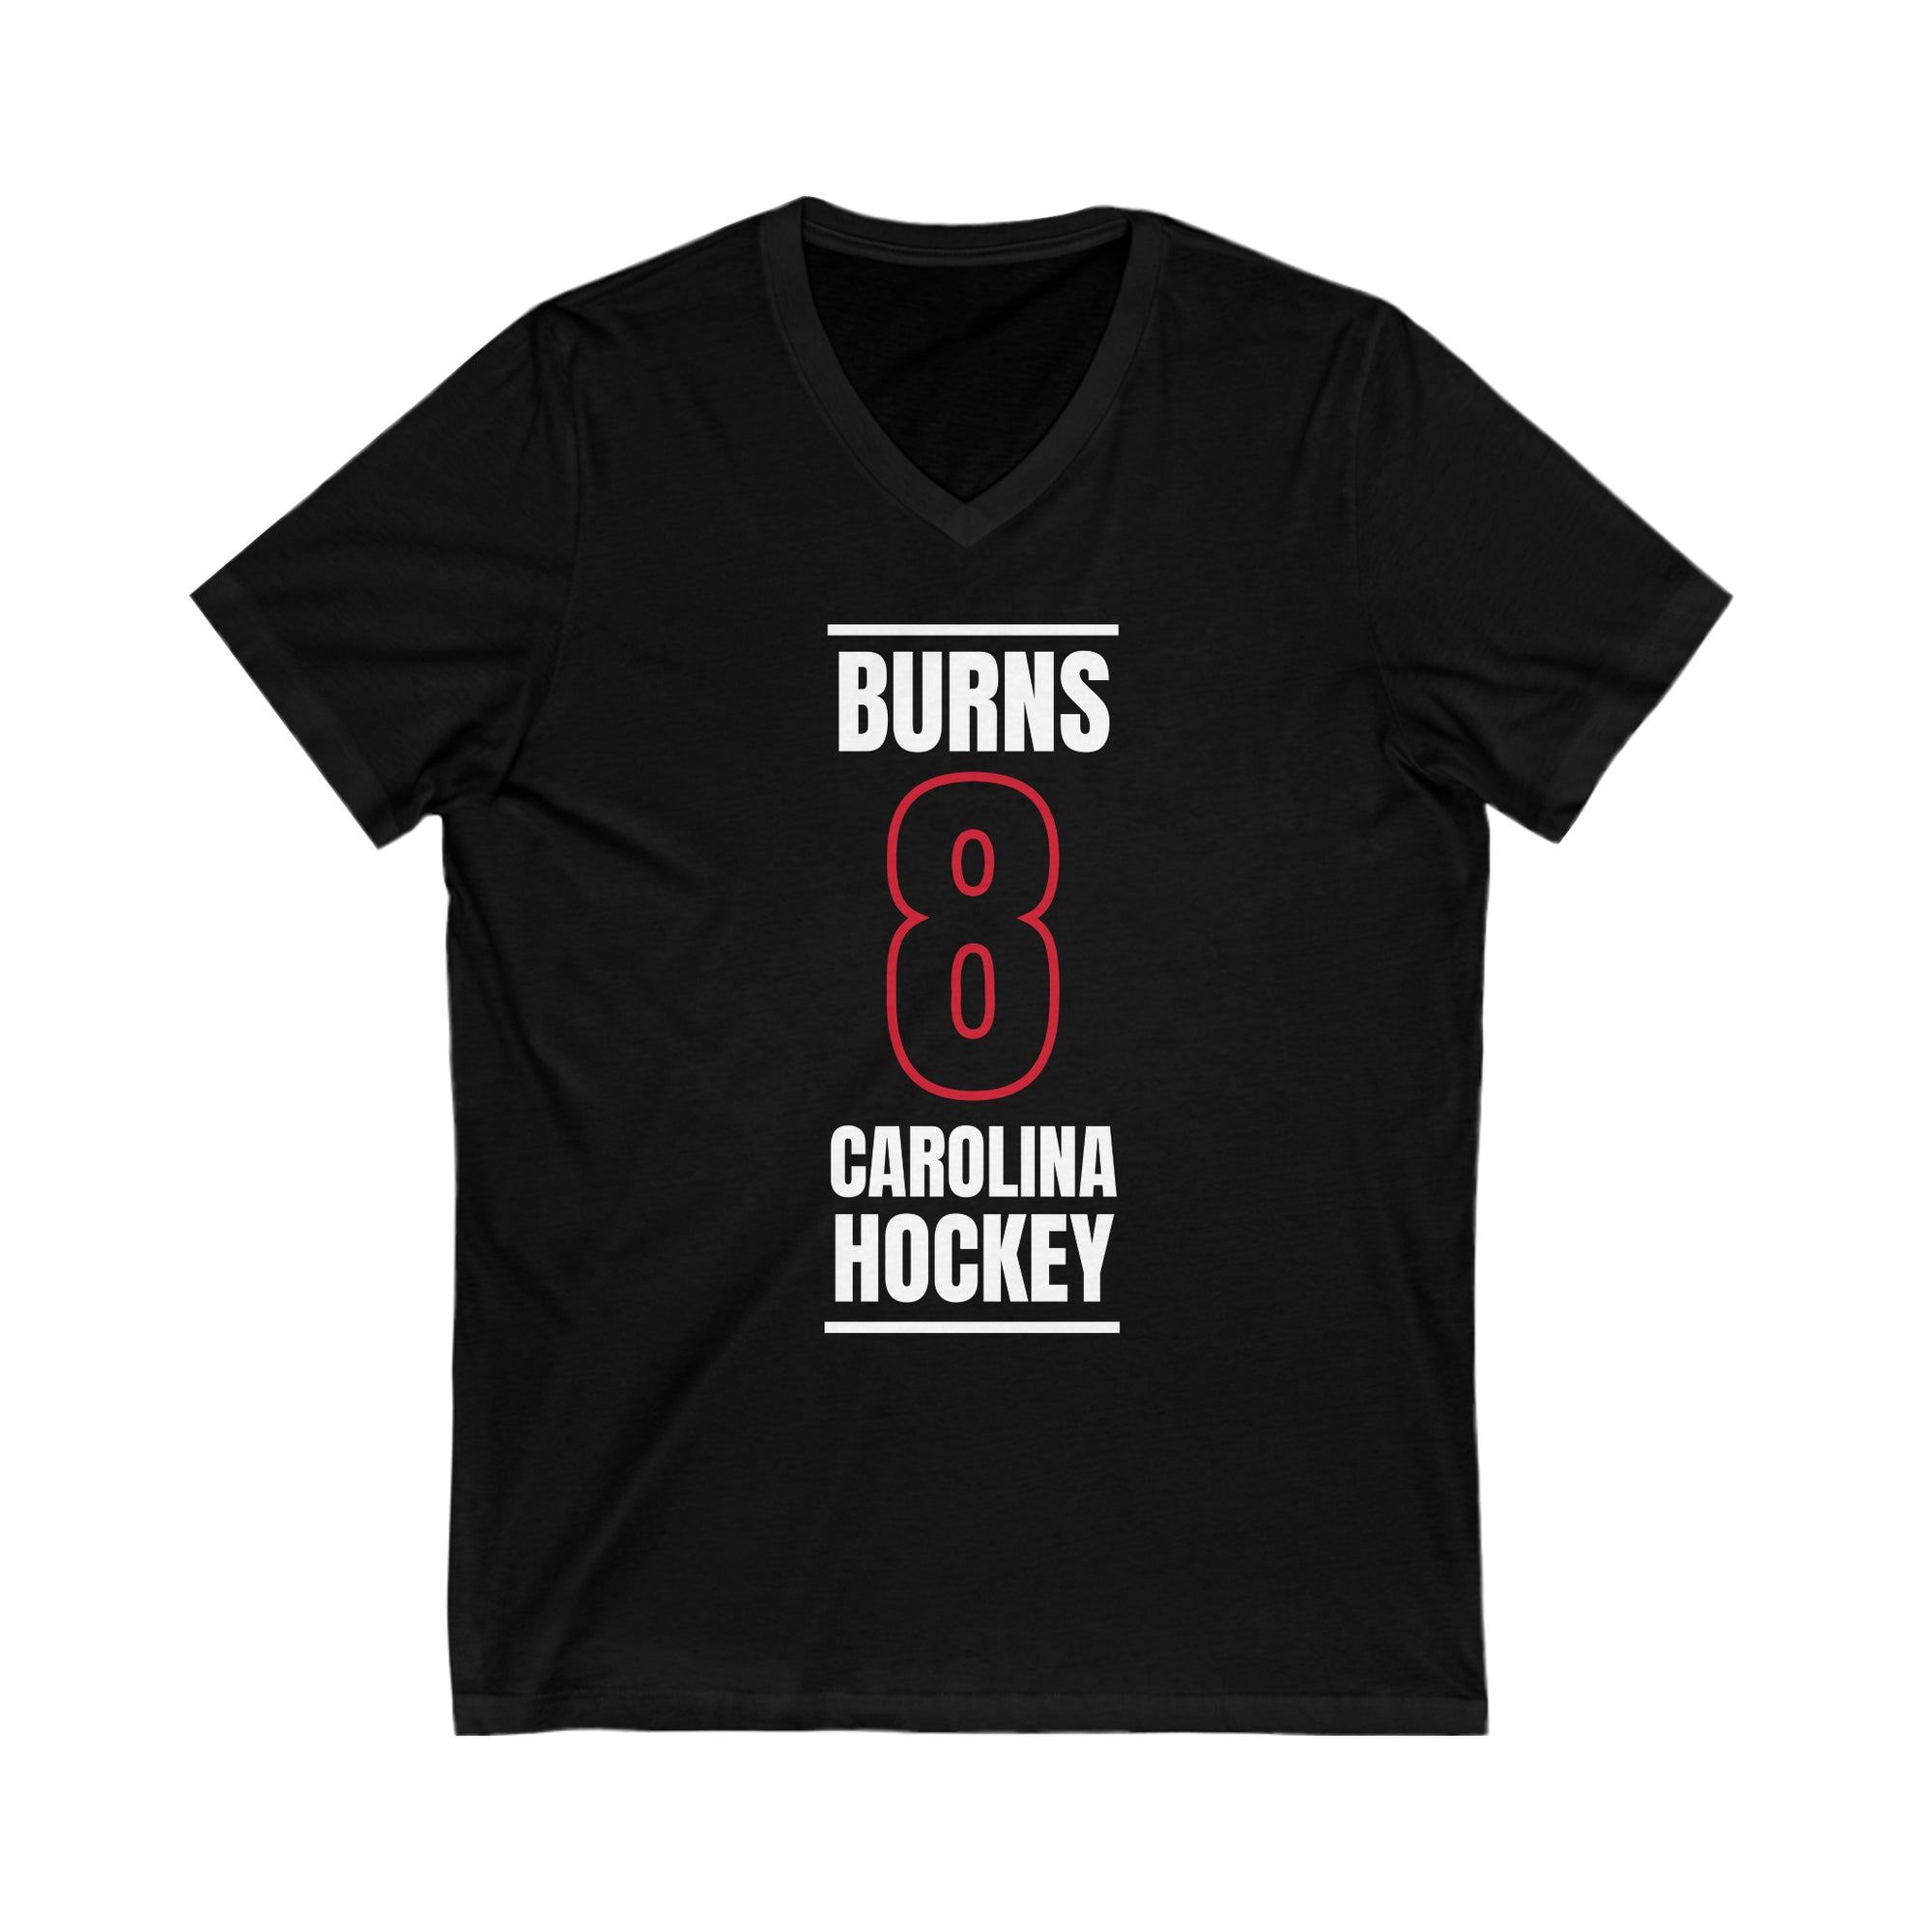 Burns 8 Carolina Hockey Black Vertical Design Unisex V-Neck Tee